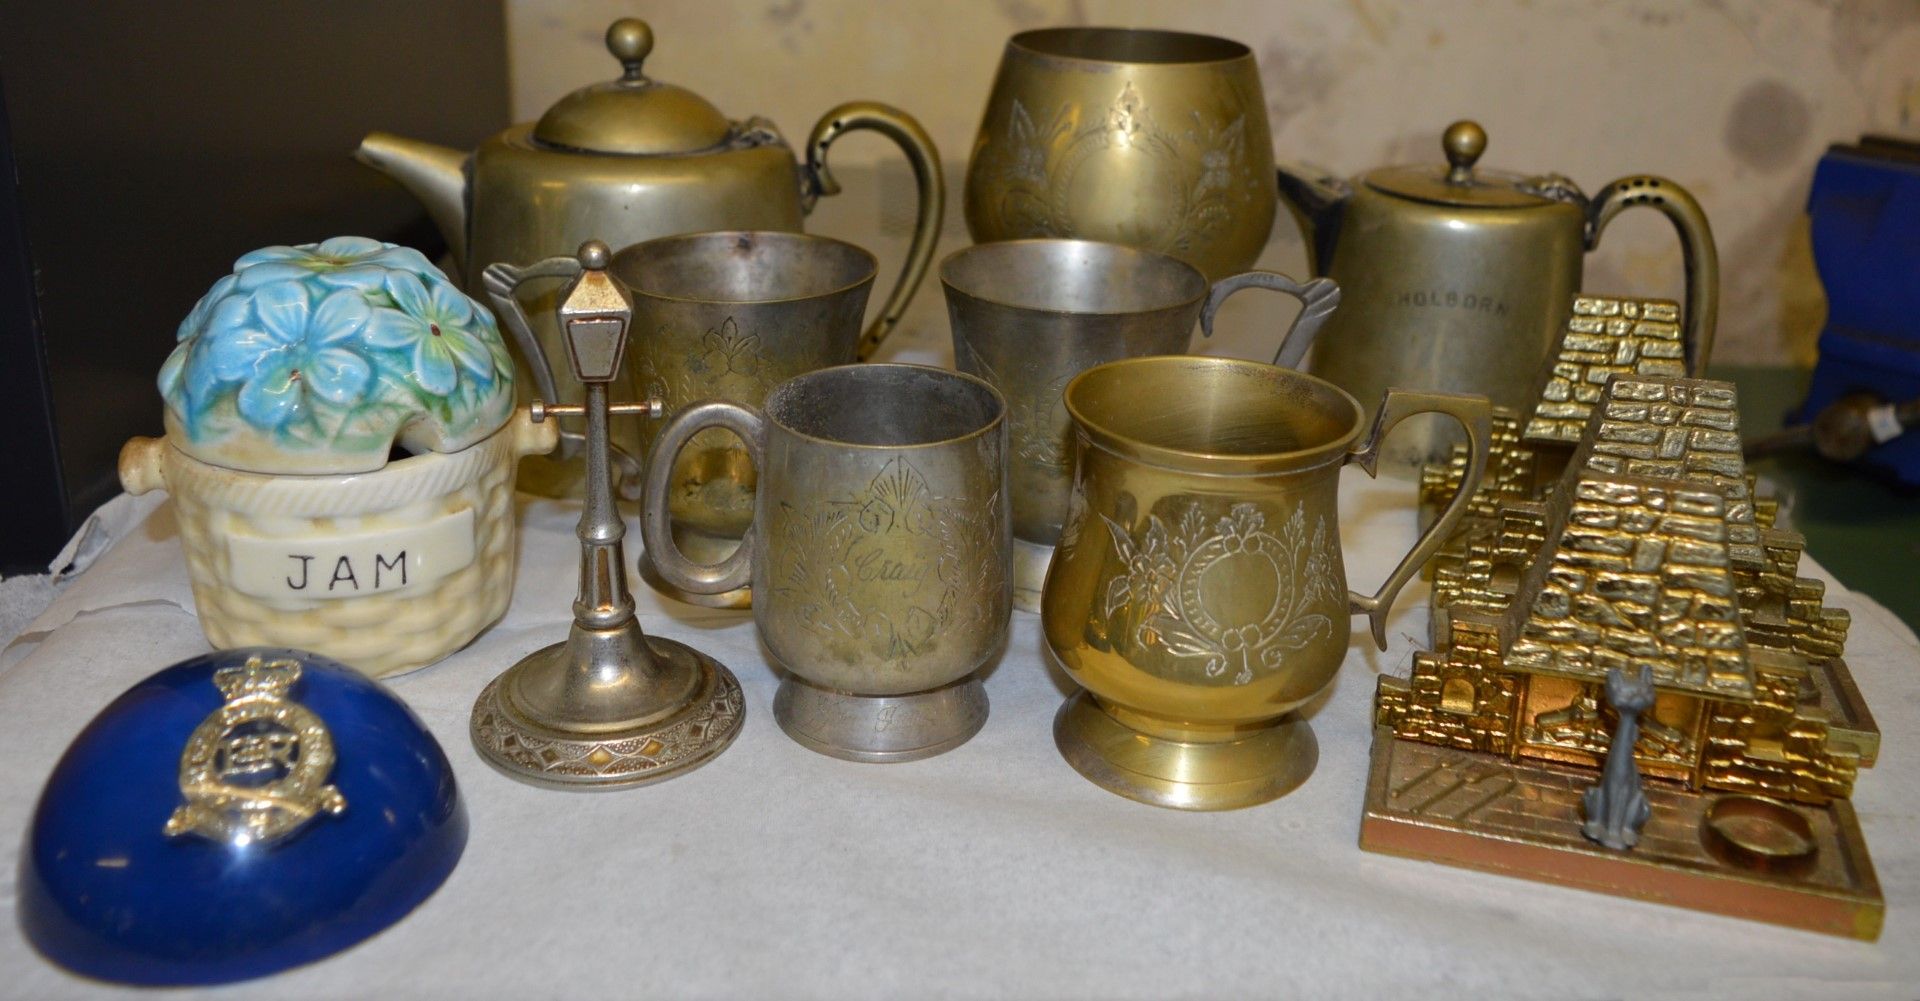 1 x Assorted Lot of Vintage Items Including Tea Pots, Cups, Decorations, Jam Jar, Royal Memborabilia